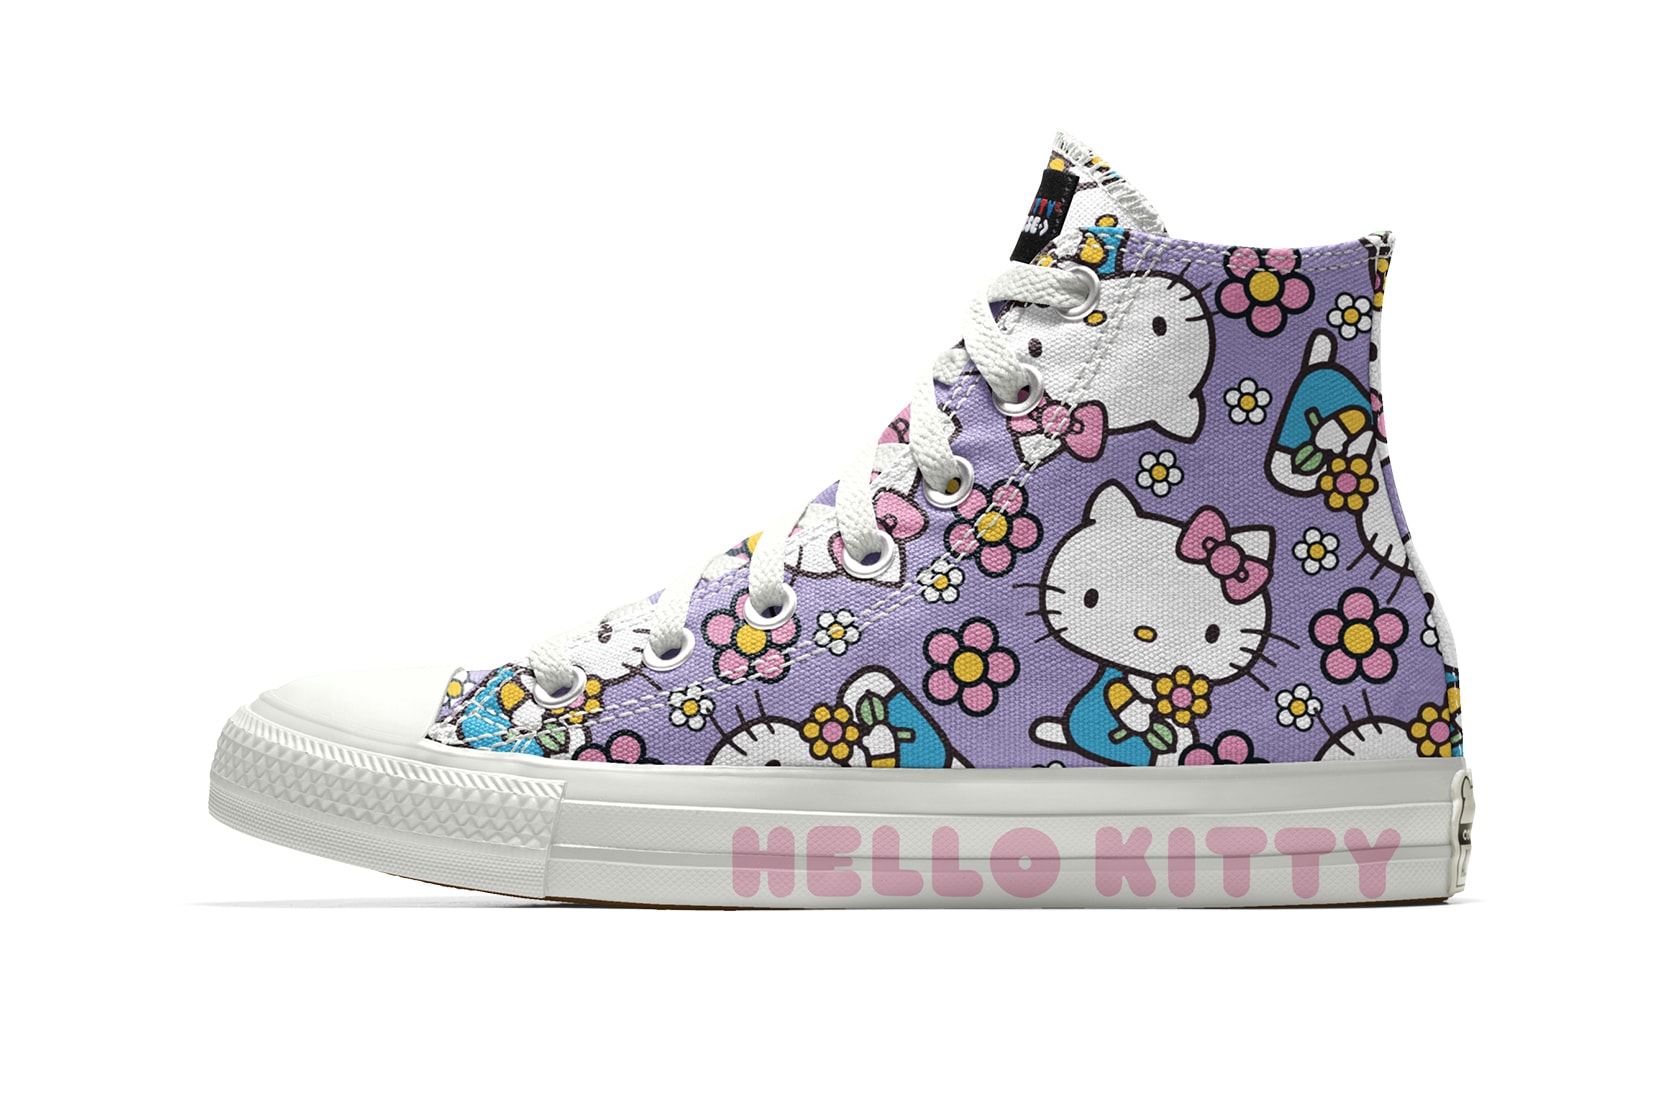 Customize Personalize Hello Kitty Converse Chuck Taylor NIKEiD